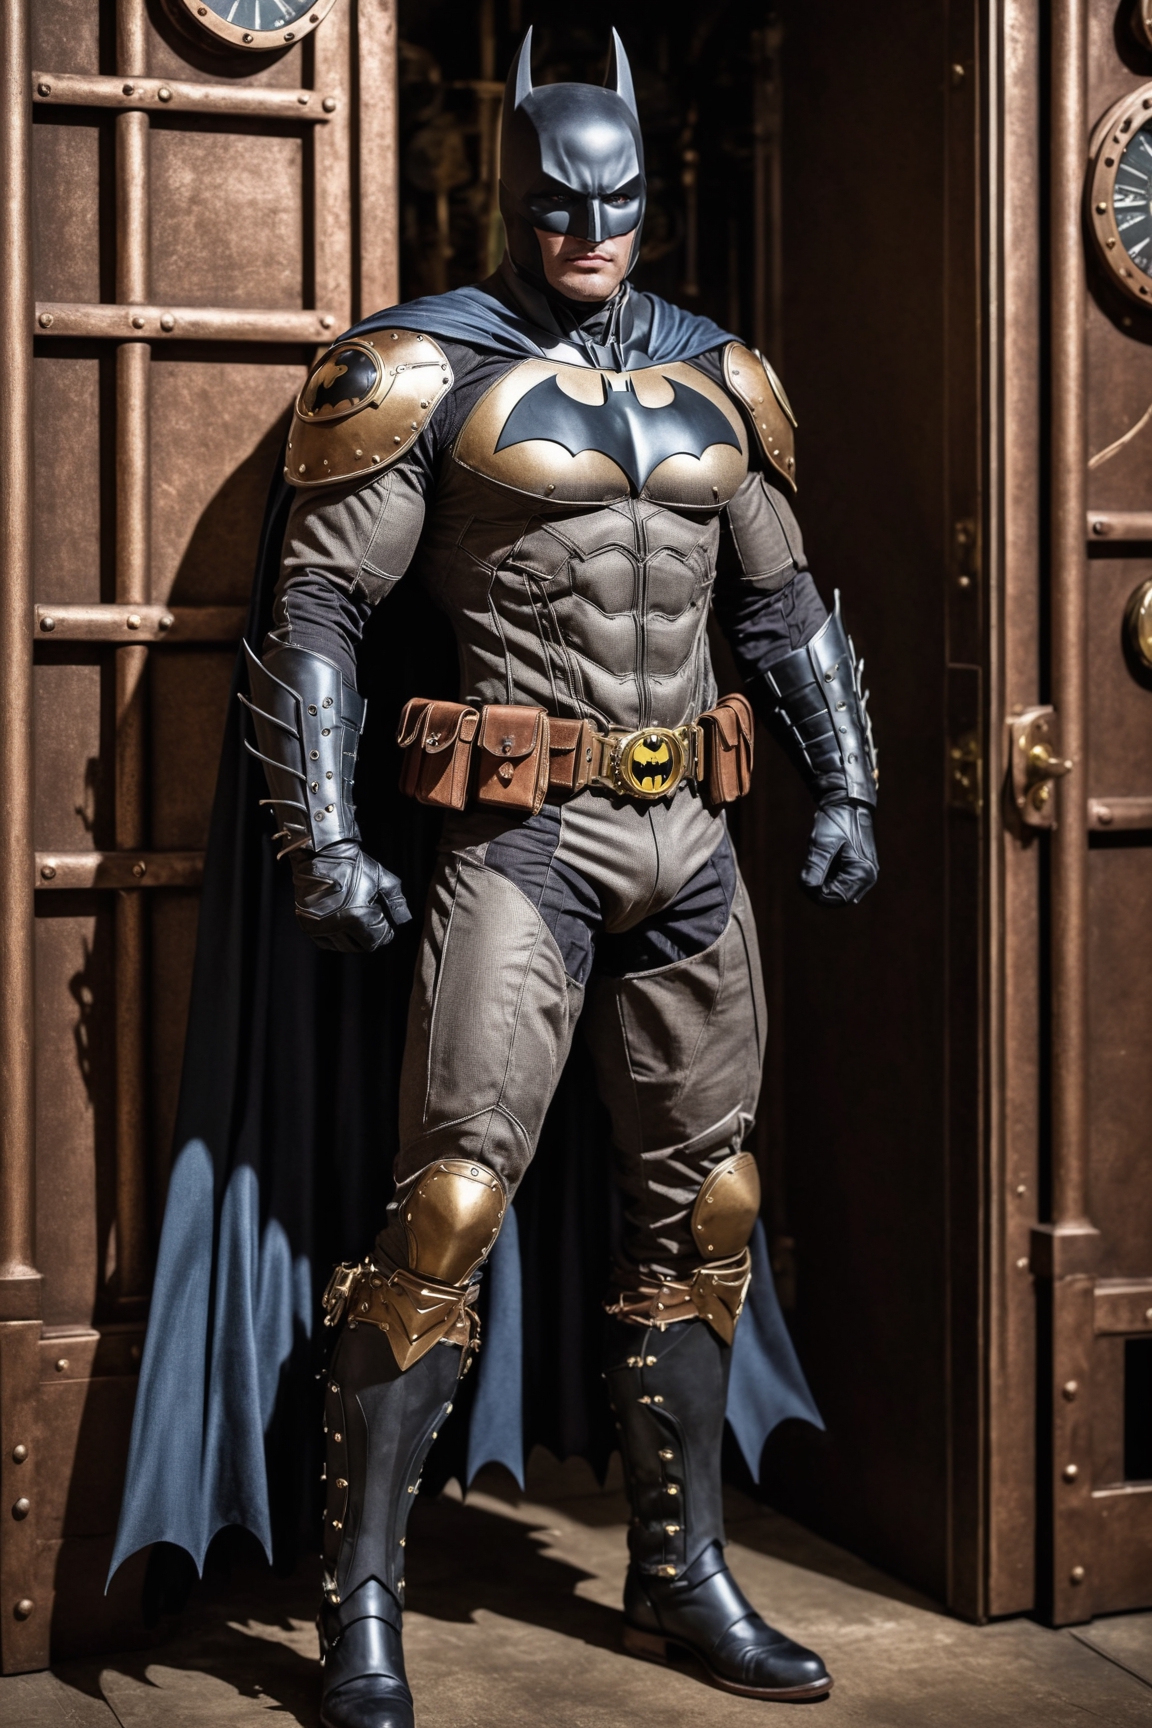 Cool Pose with Batarang | Batman, Batman dark, Batman action figures